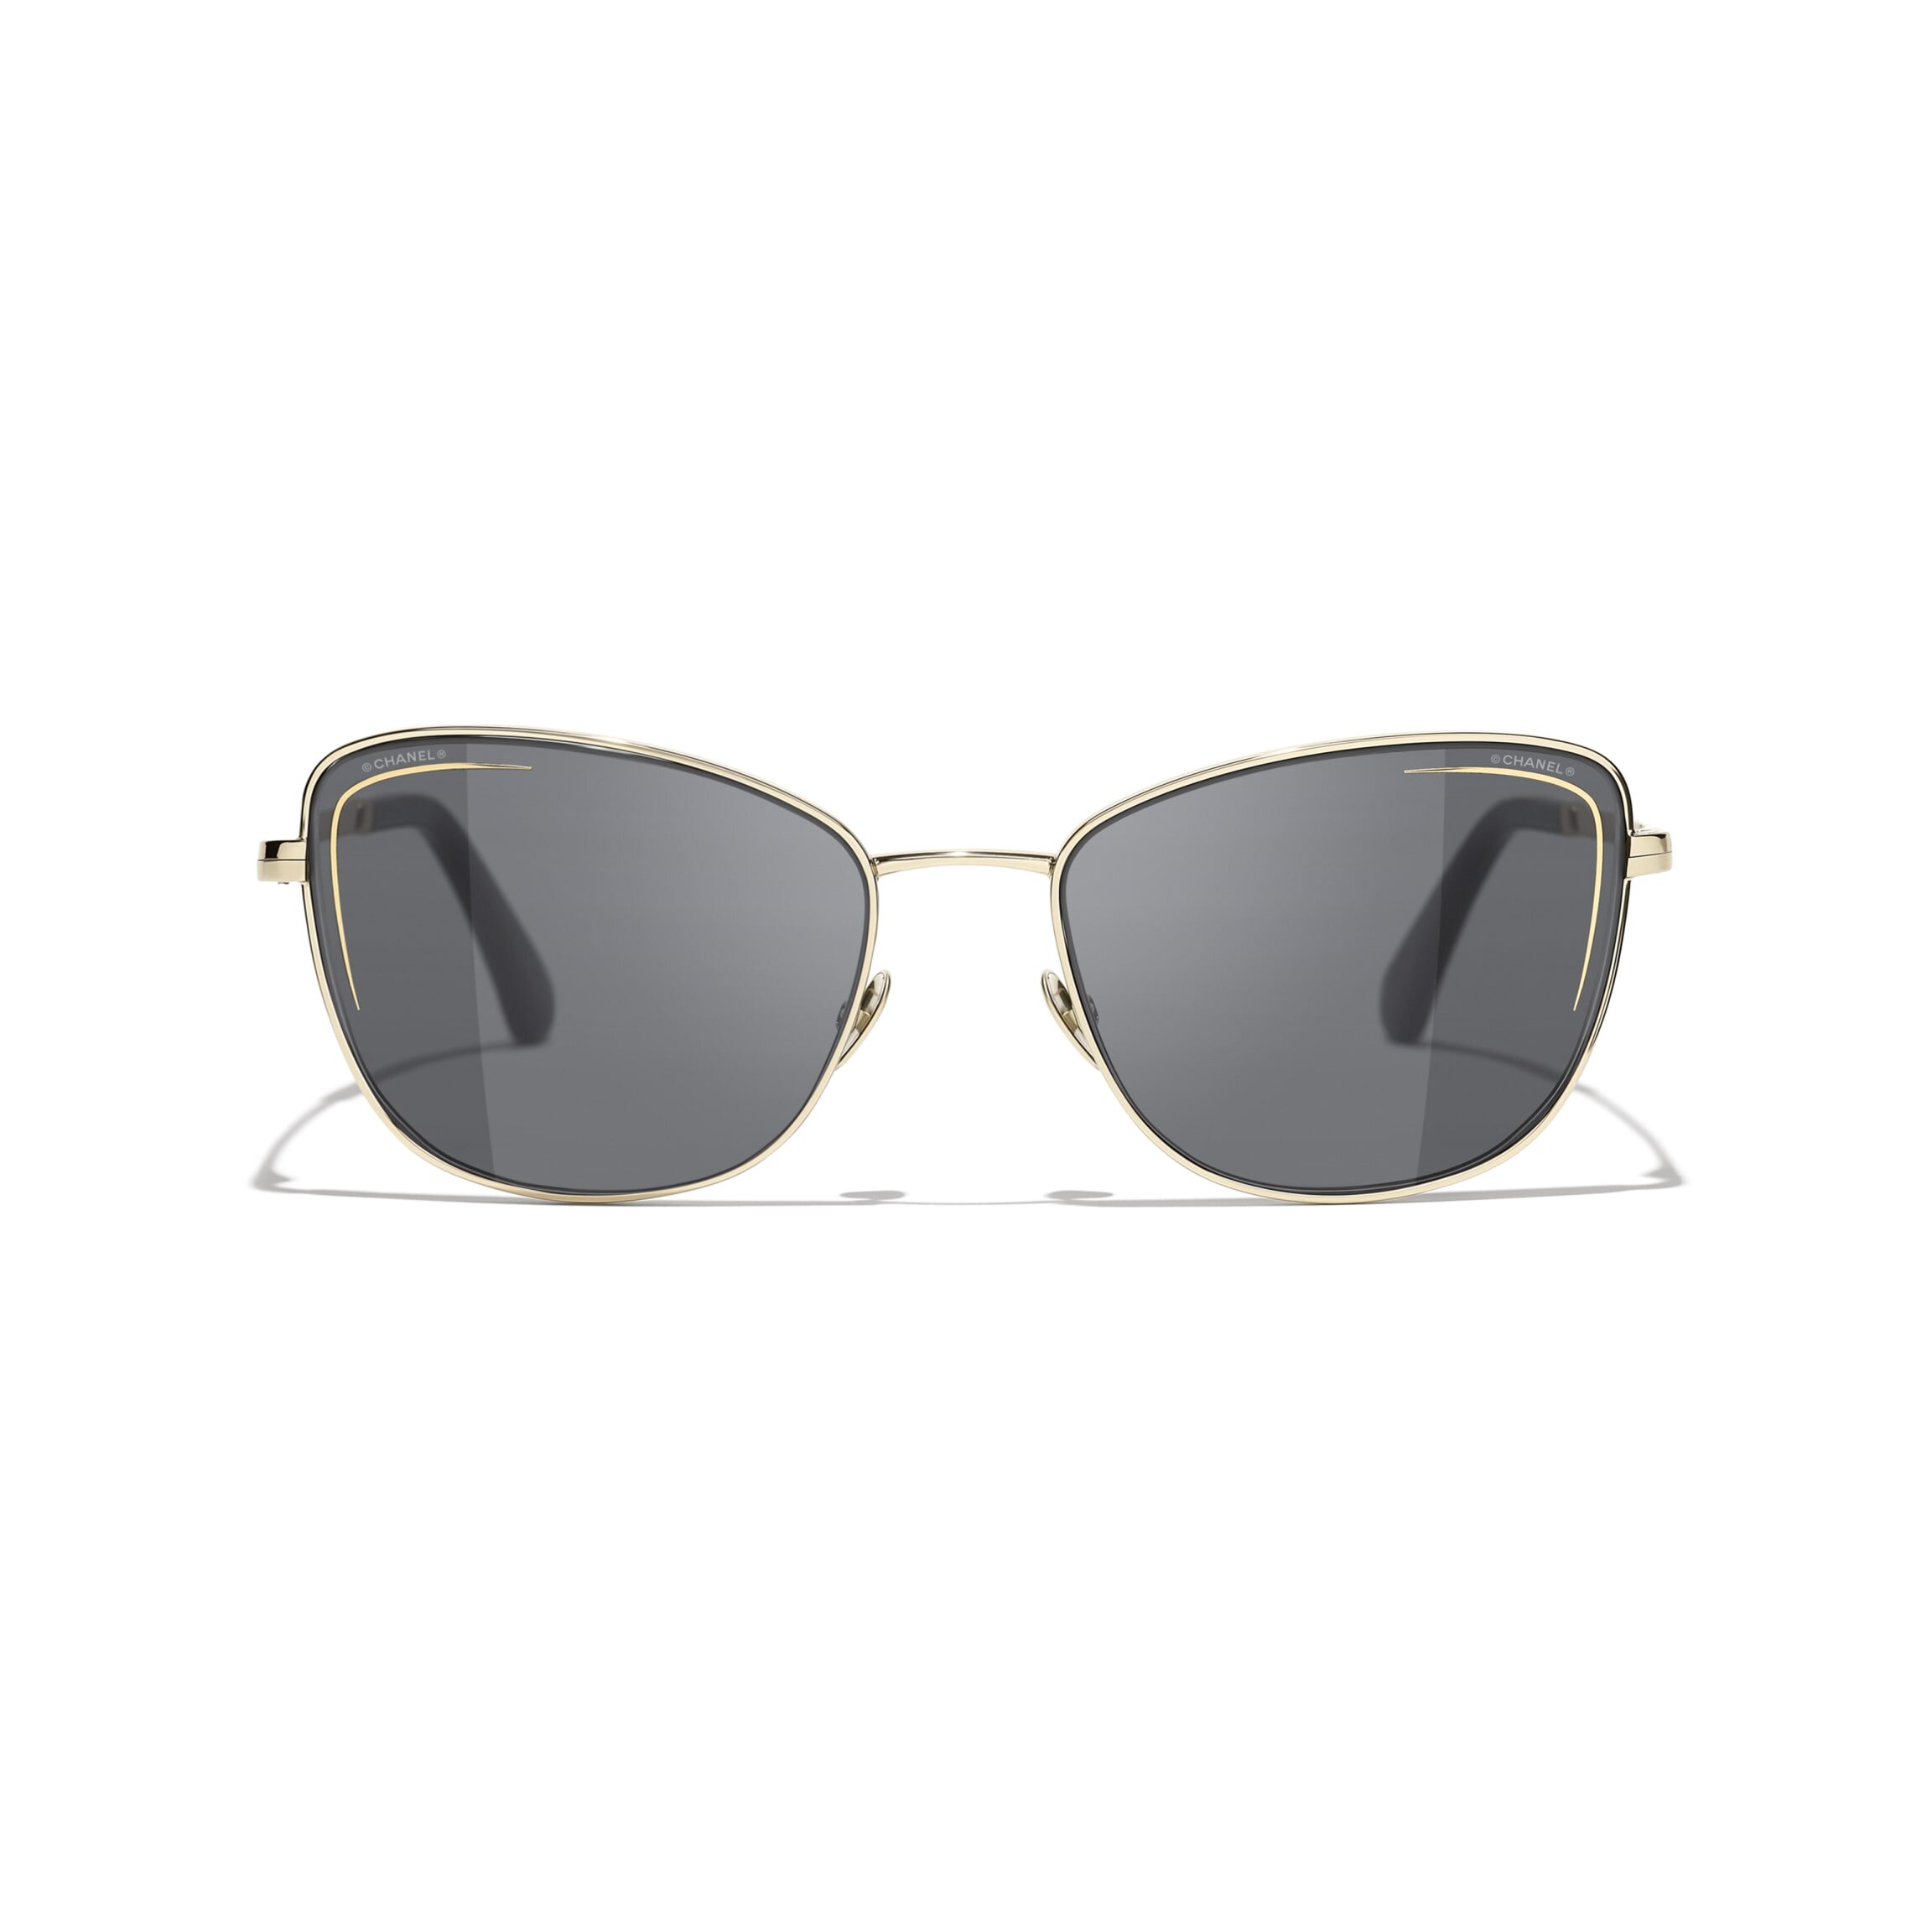 Chanel 4267 C108:3 Sunglasses in Gold.jpg